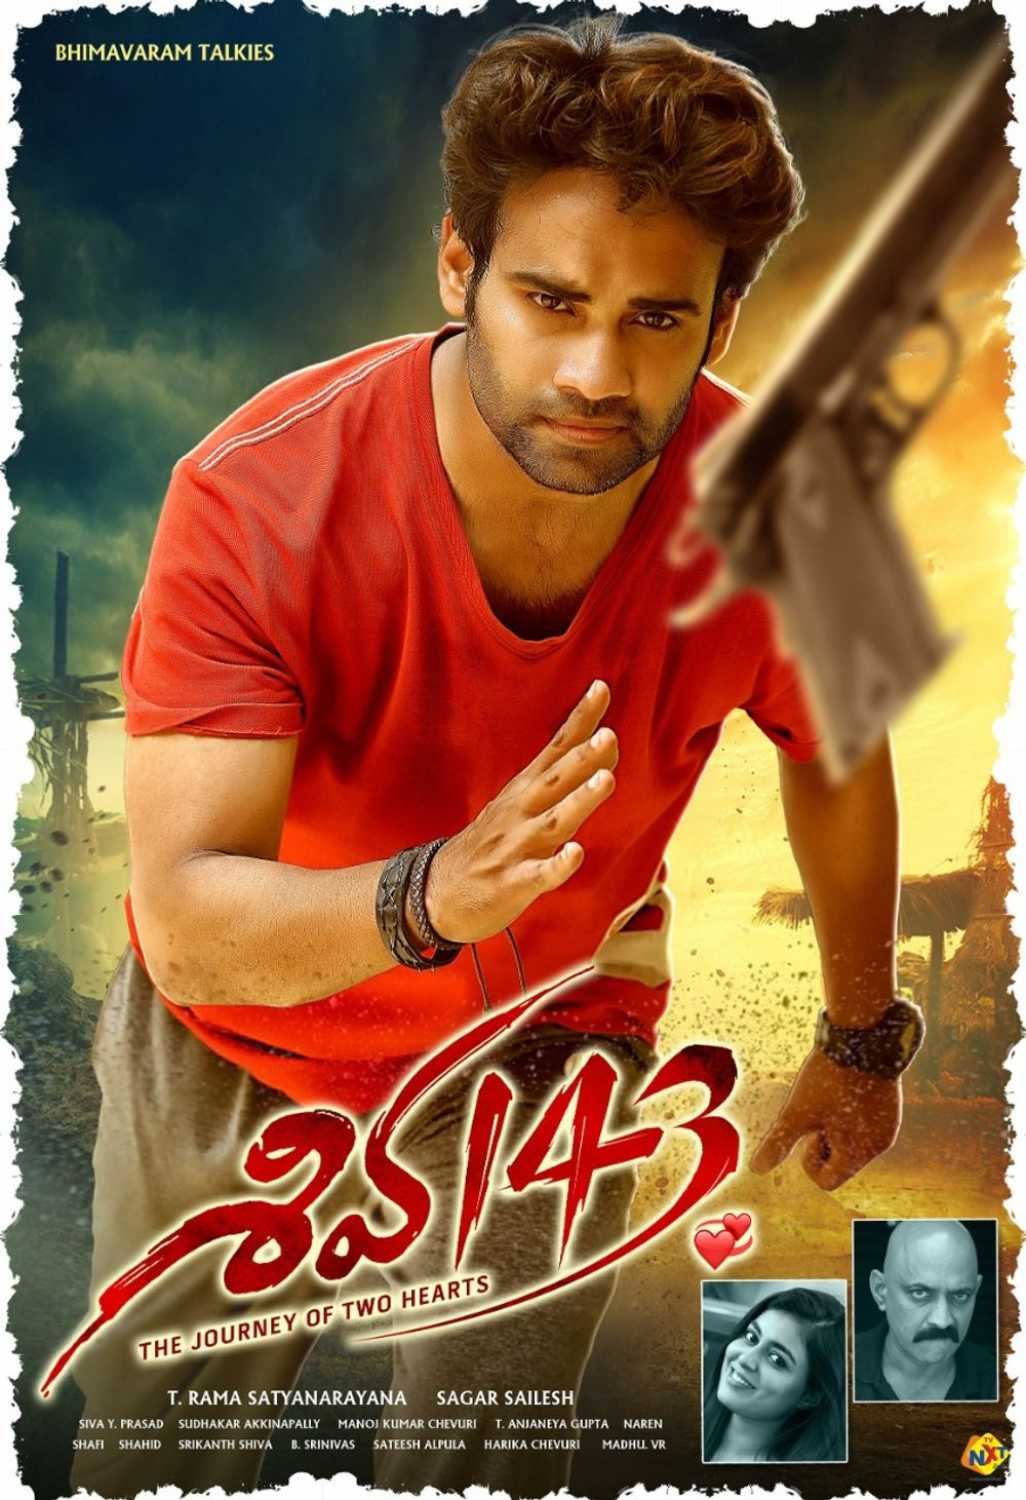 IN-Telugu: Shiva (2008)